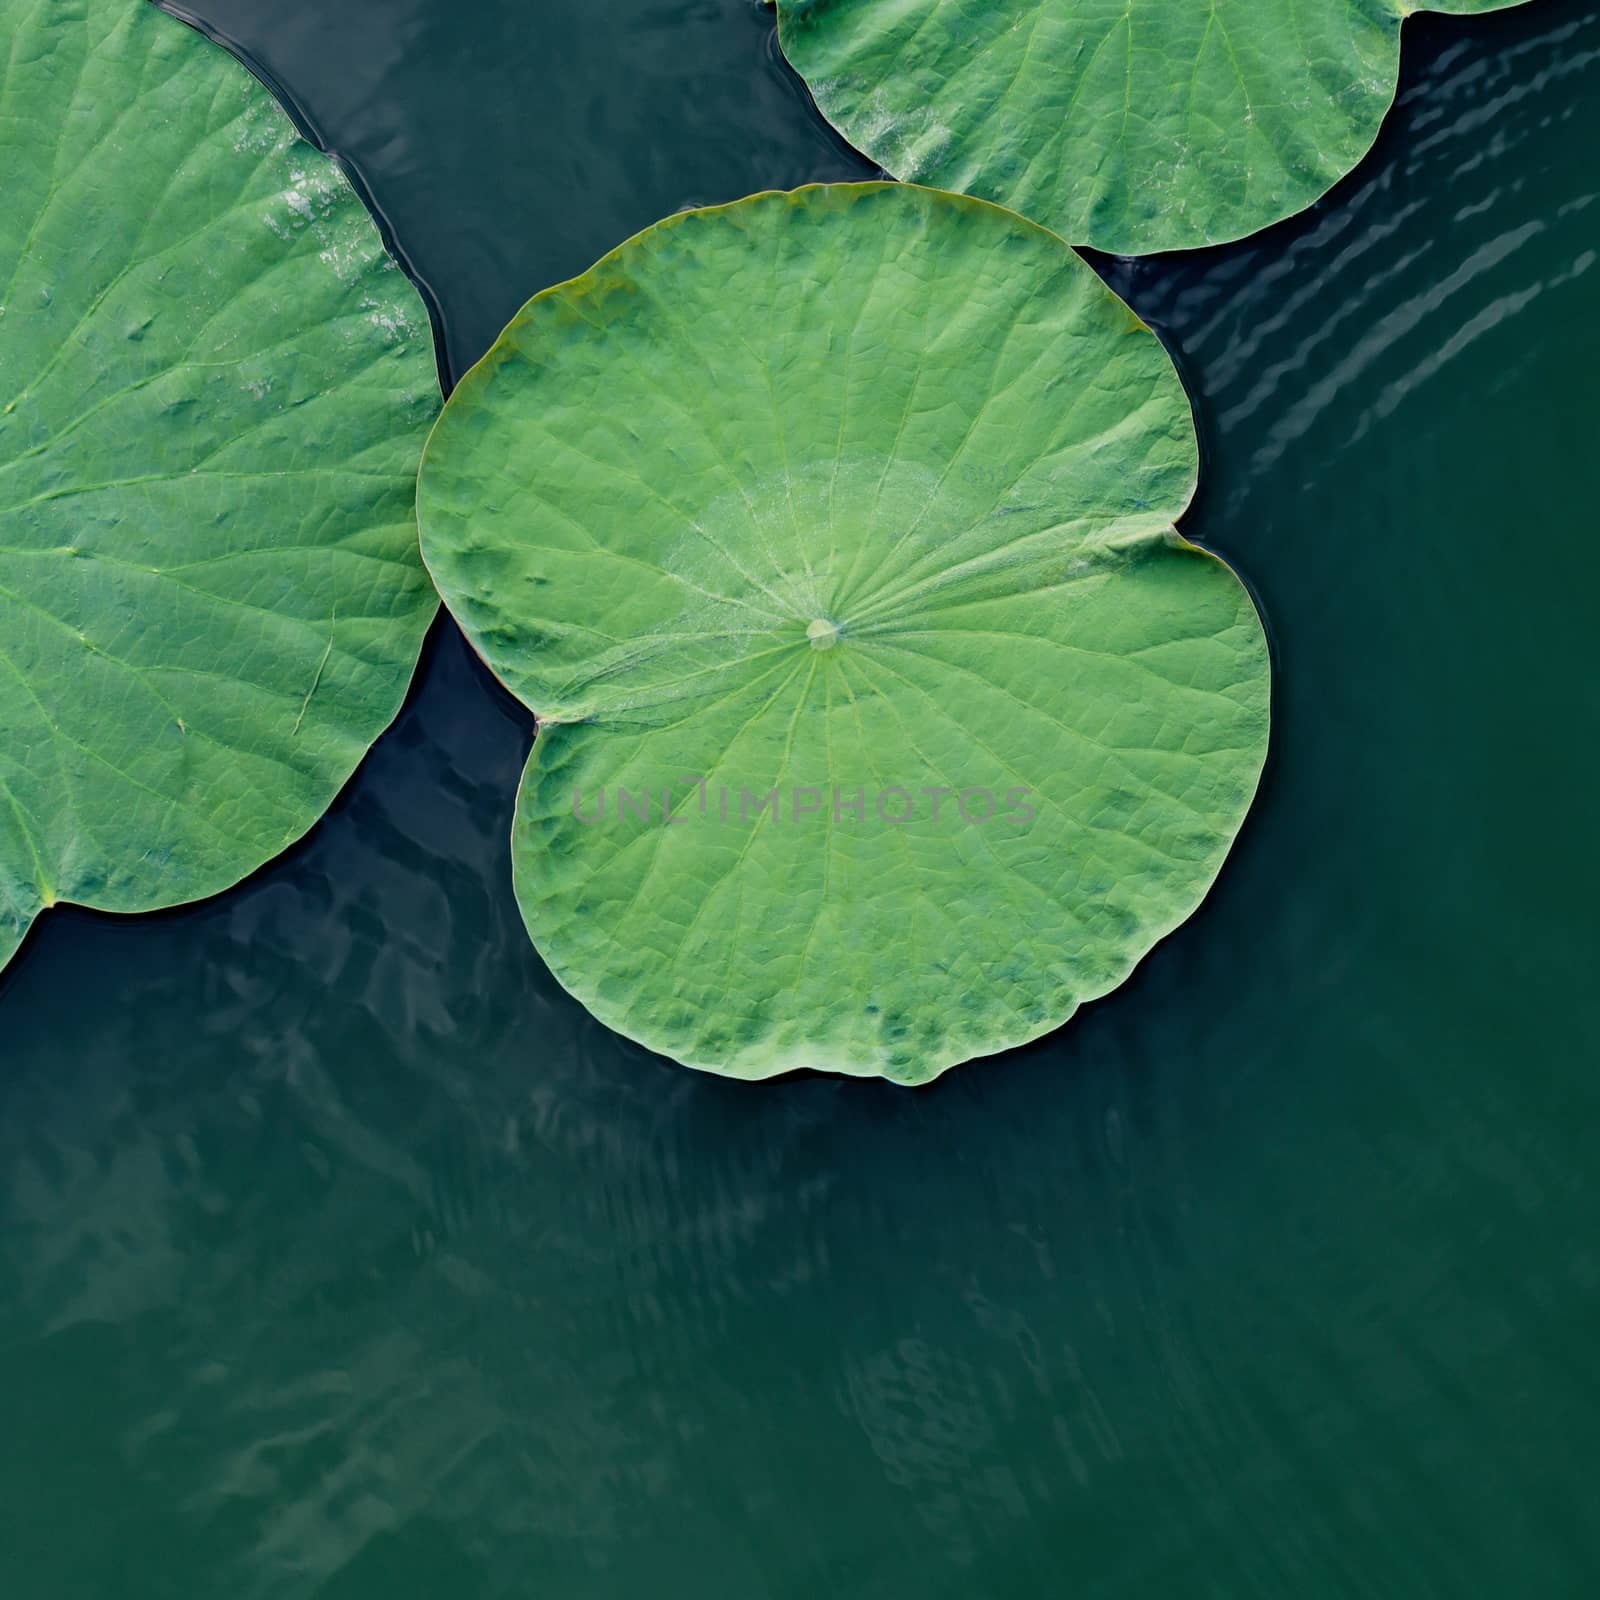 Green lotus leaf in the lake.